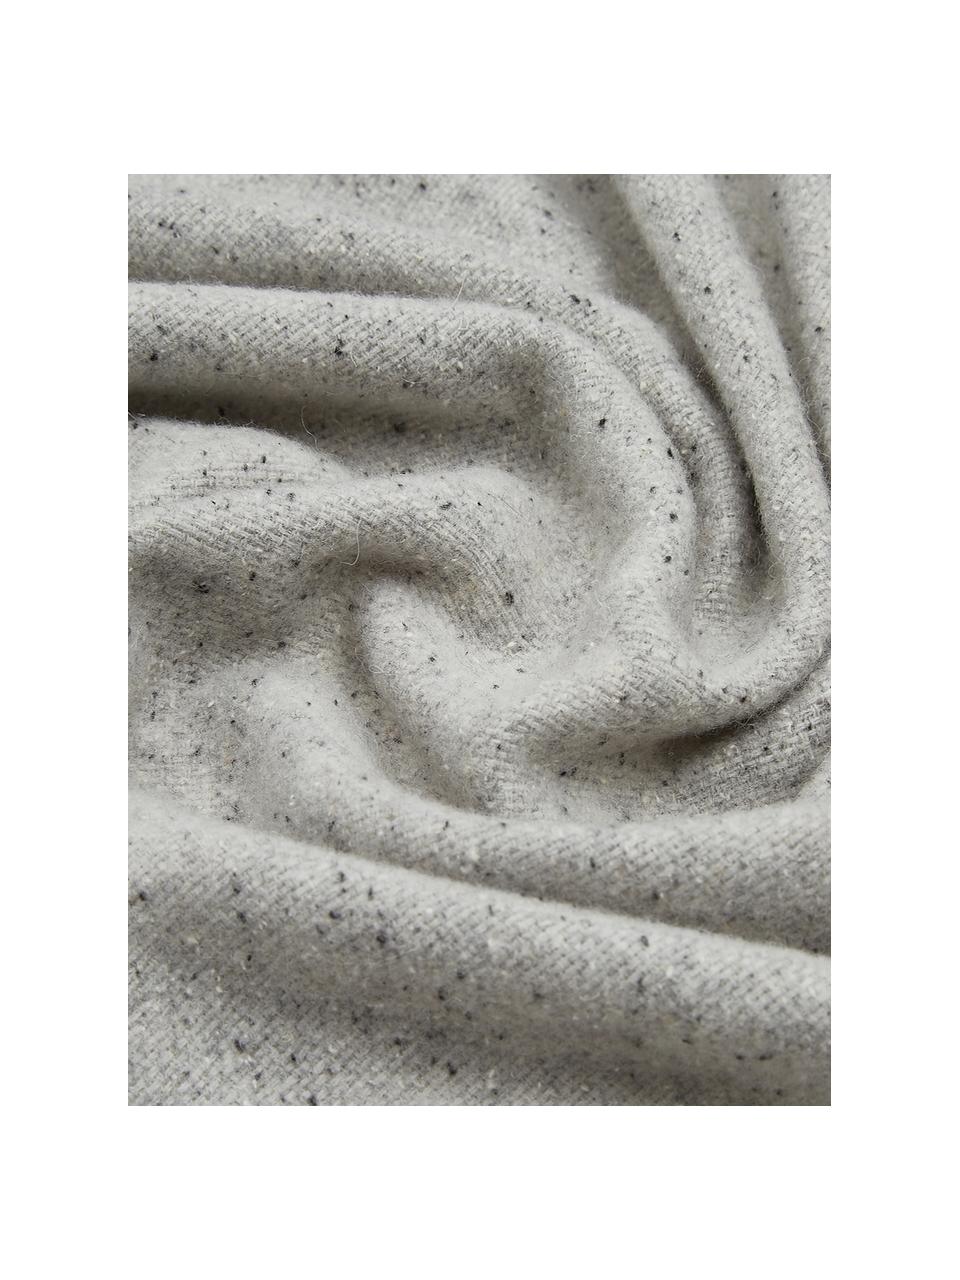 Grau melierte Wolldecke Ionio, 48% Wolle, 25% Polyamid, 12% Viskose, 10% Seide, 5% Kaschmir, Grau, meliert, 130 x 170 cm